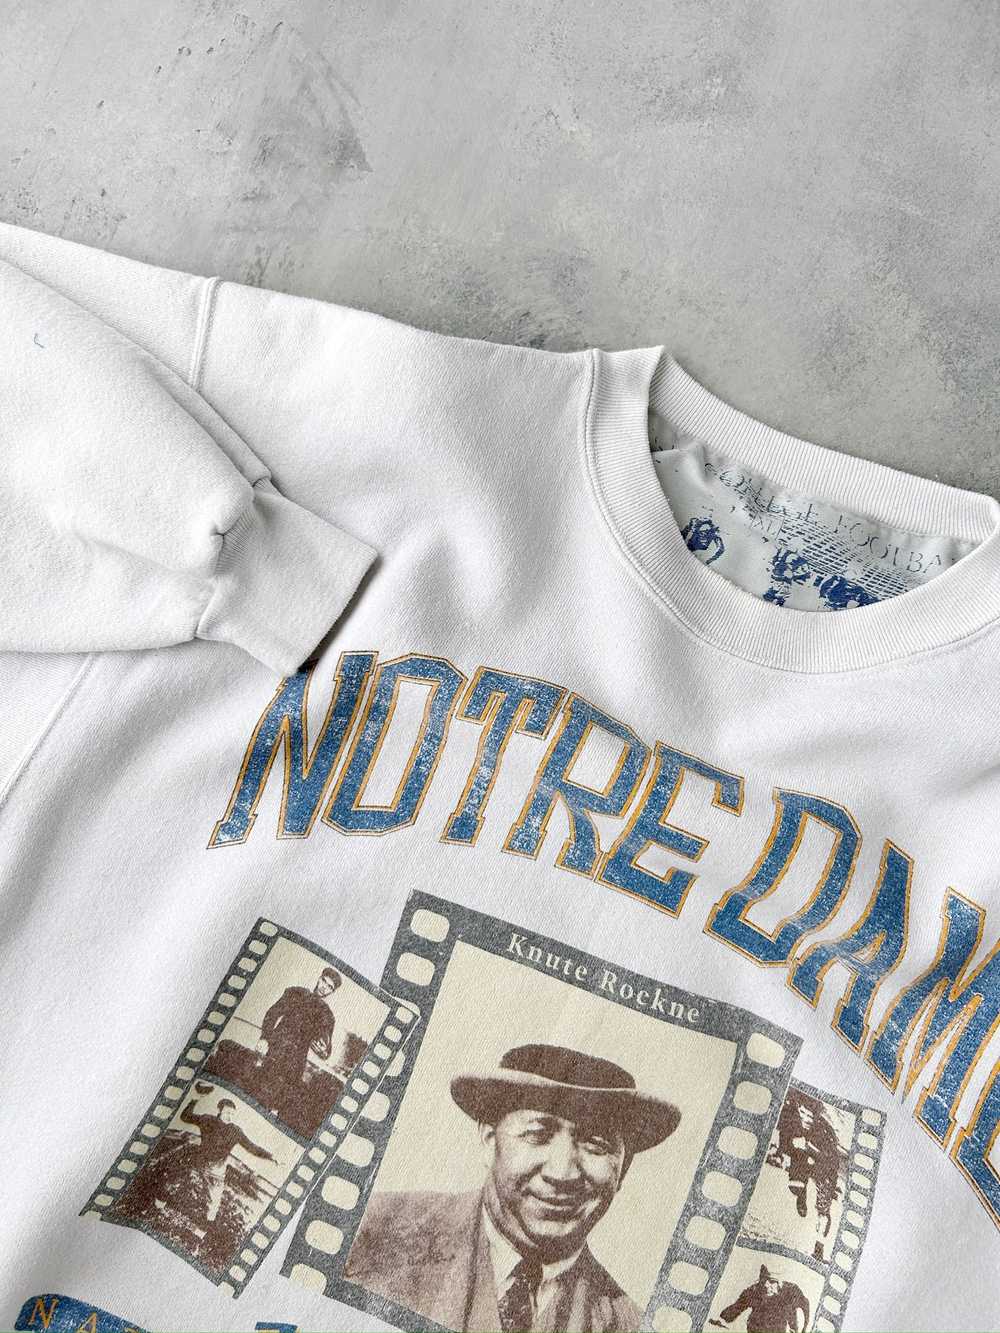 Notre Dame Sweatshirt 90's - Large - image 2